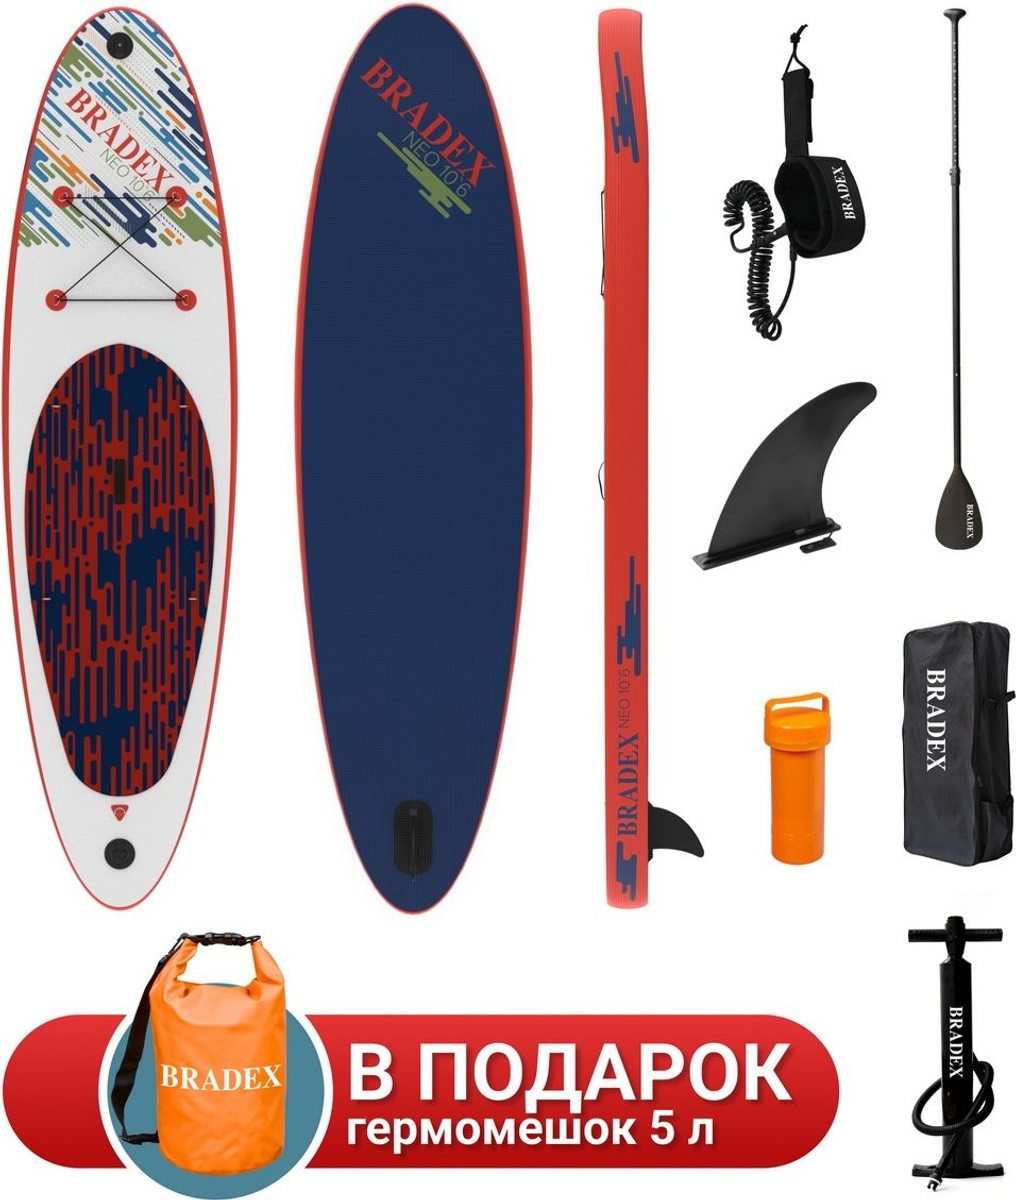 Bradex Neo 10’6 из каталога SUP досок в Санкт-Петербурге по цене 31190 ₽